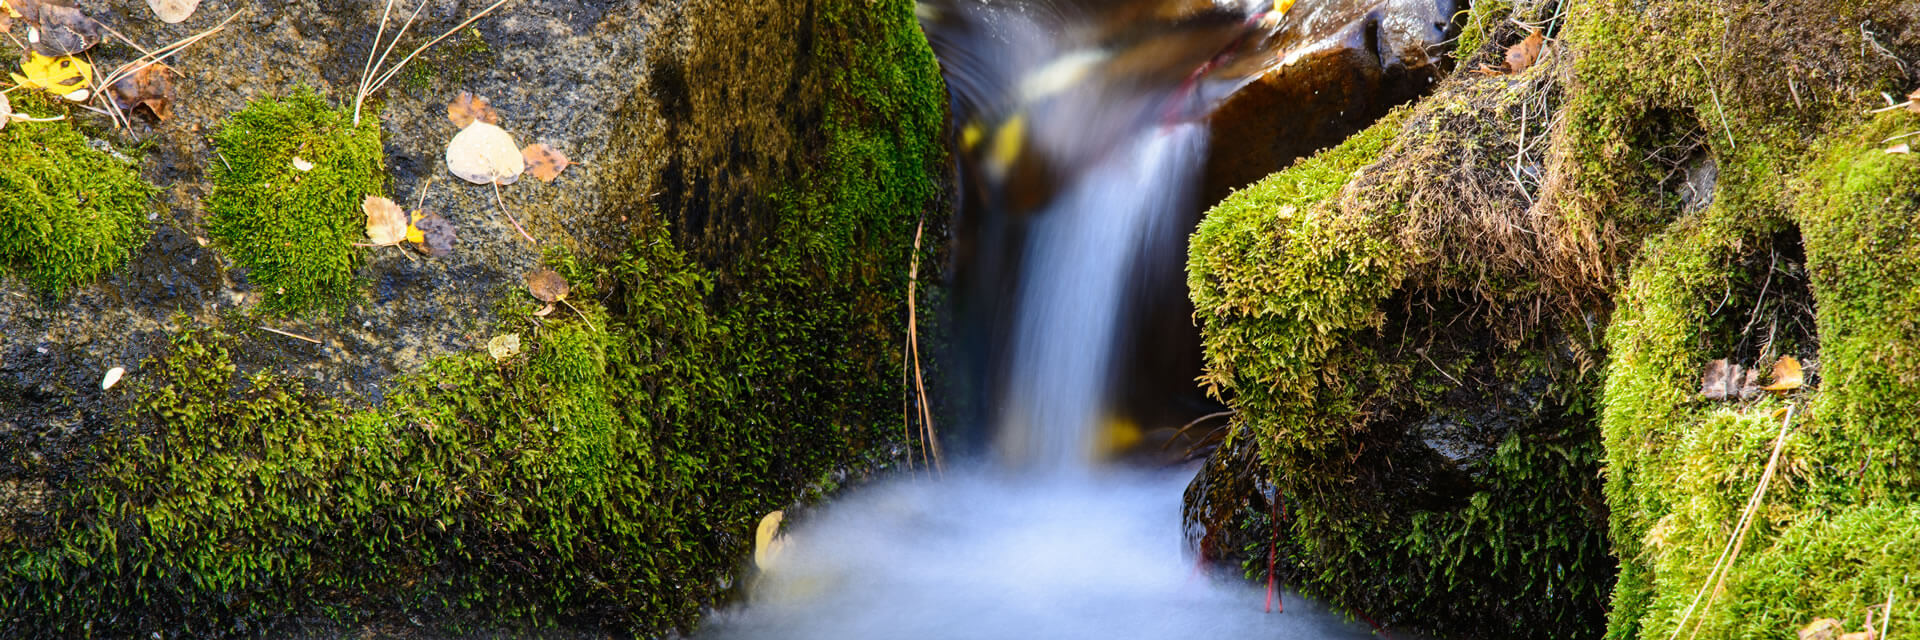 Slow-motion waterfall